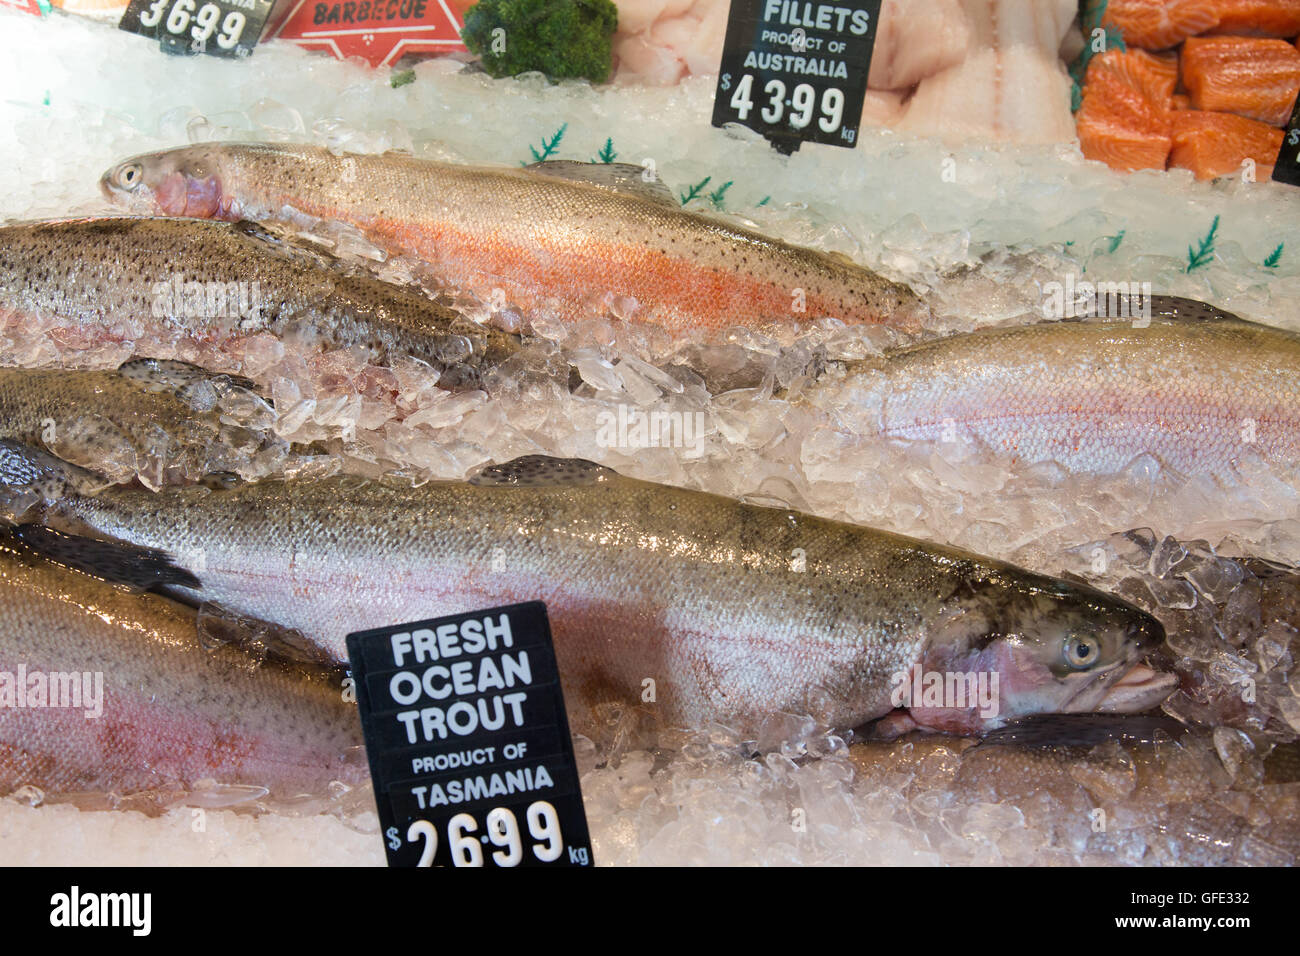 Australian fishmonger store in Manly,Sydney selling a range of fresh australian fish including fresh ocean trout Stock Photo